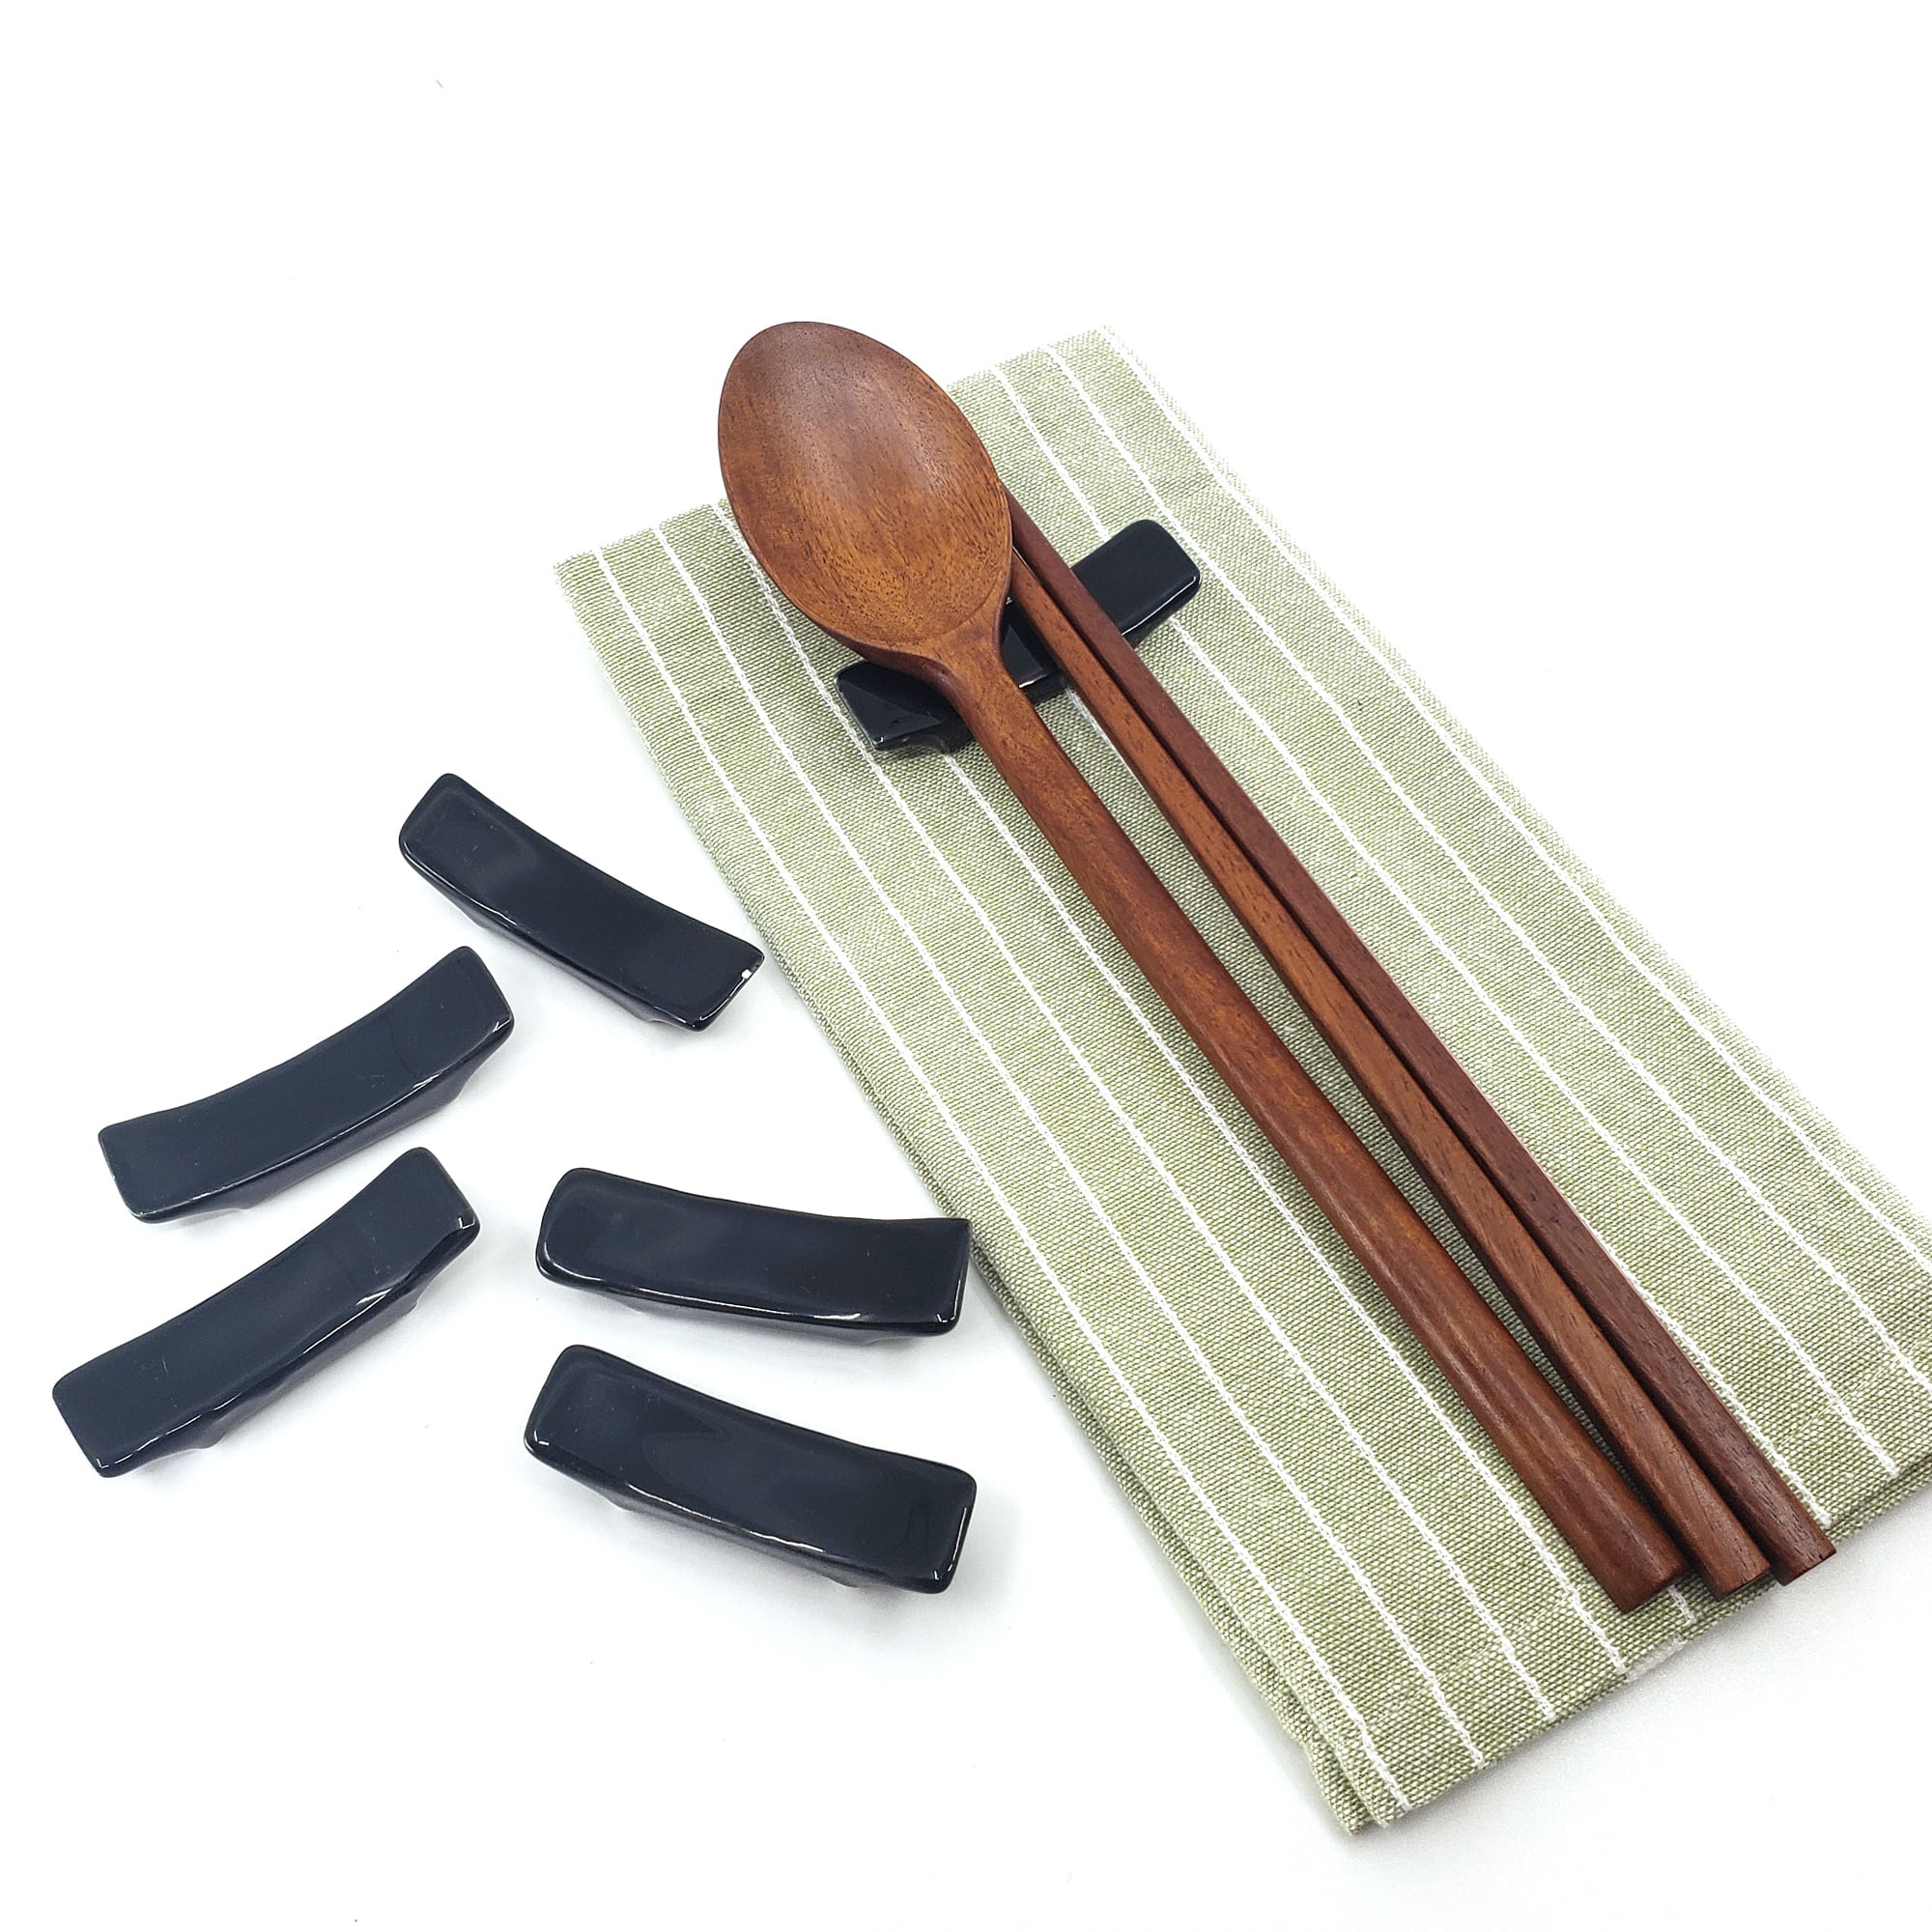 Chopsticks Spoons and Forks Rest Dinner Tableware Spoon Stand Rest Holder